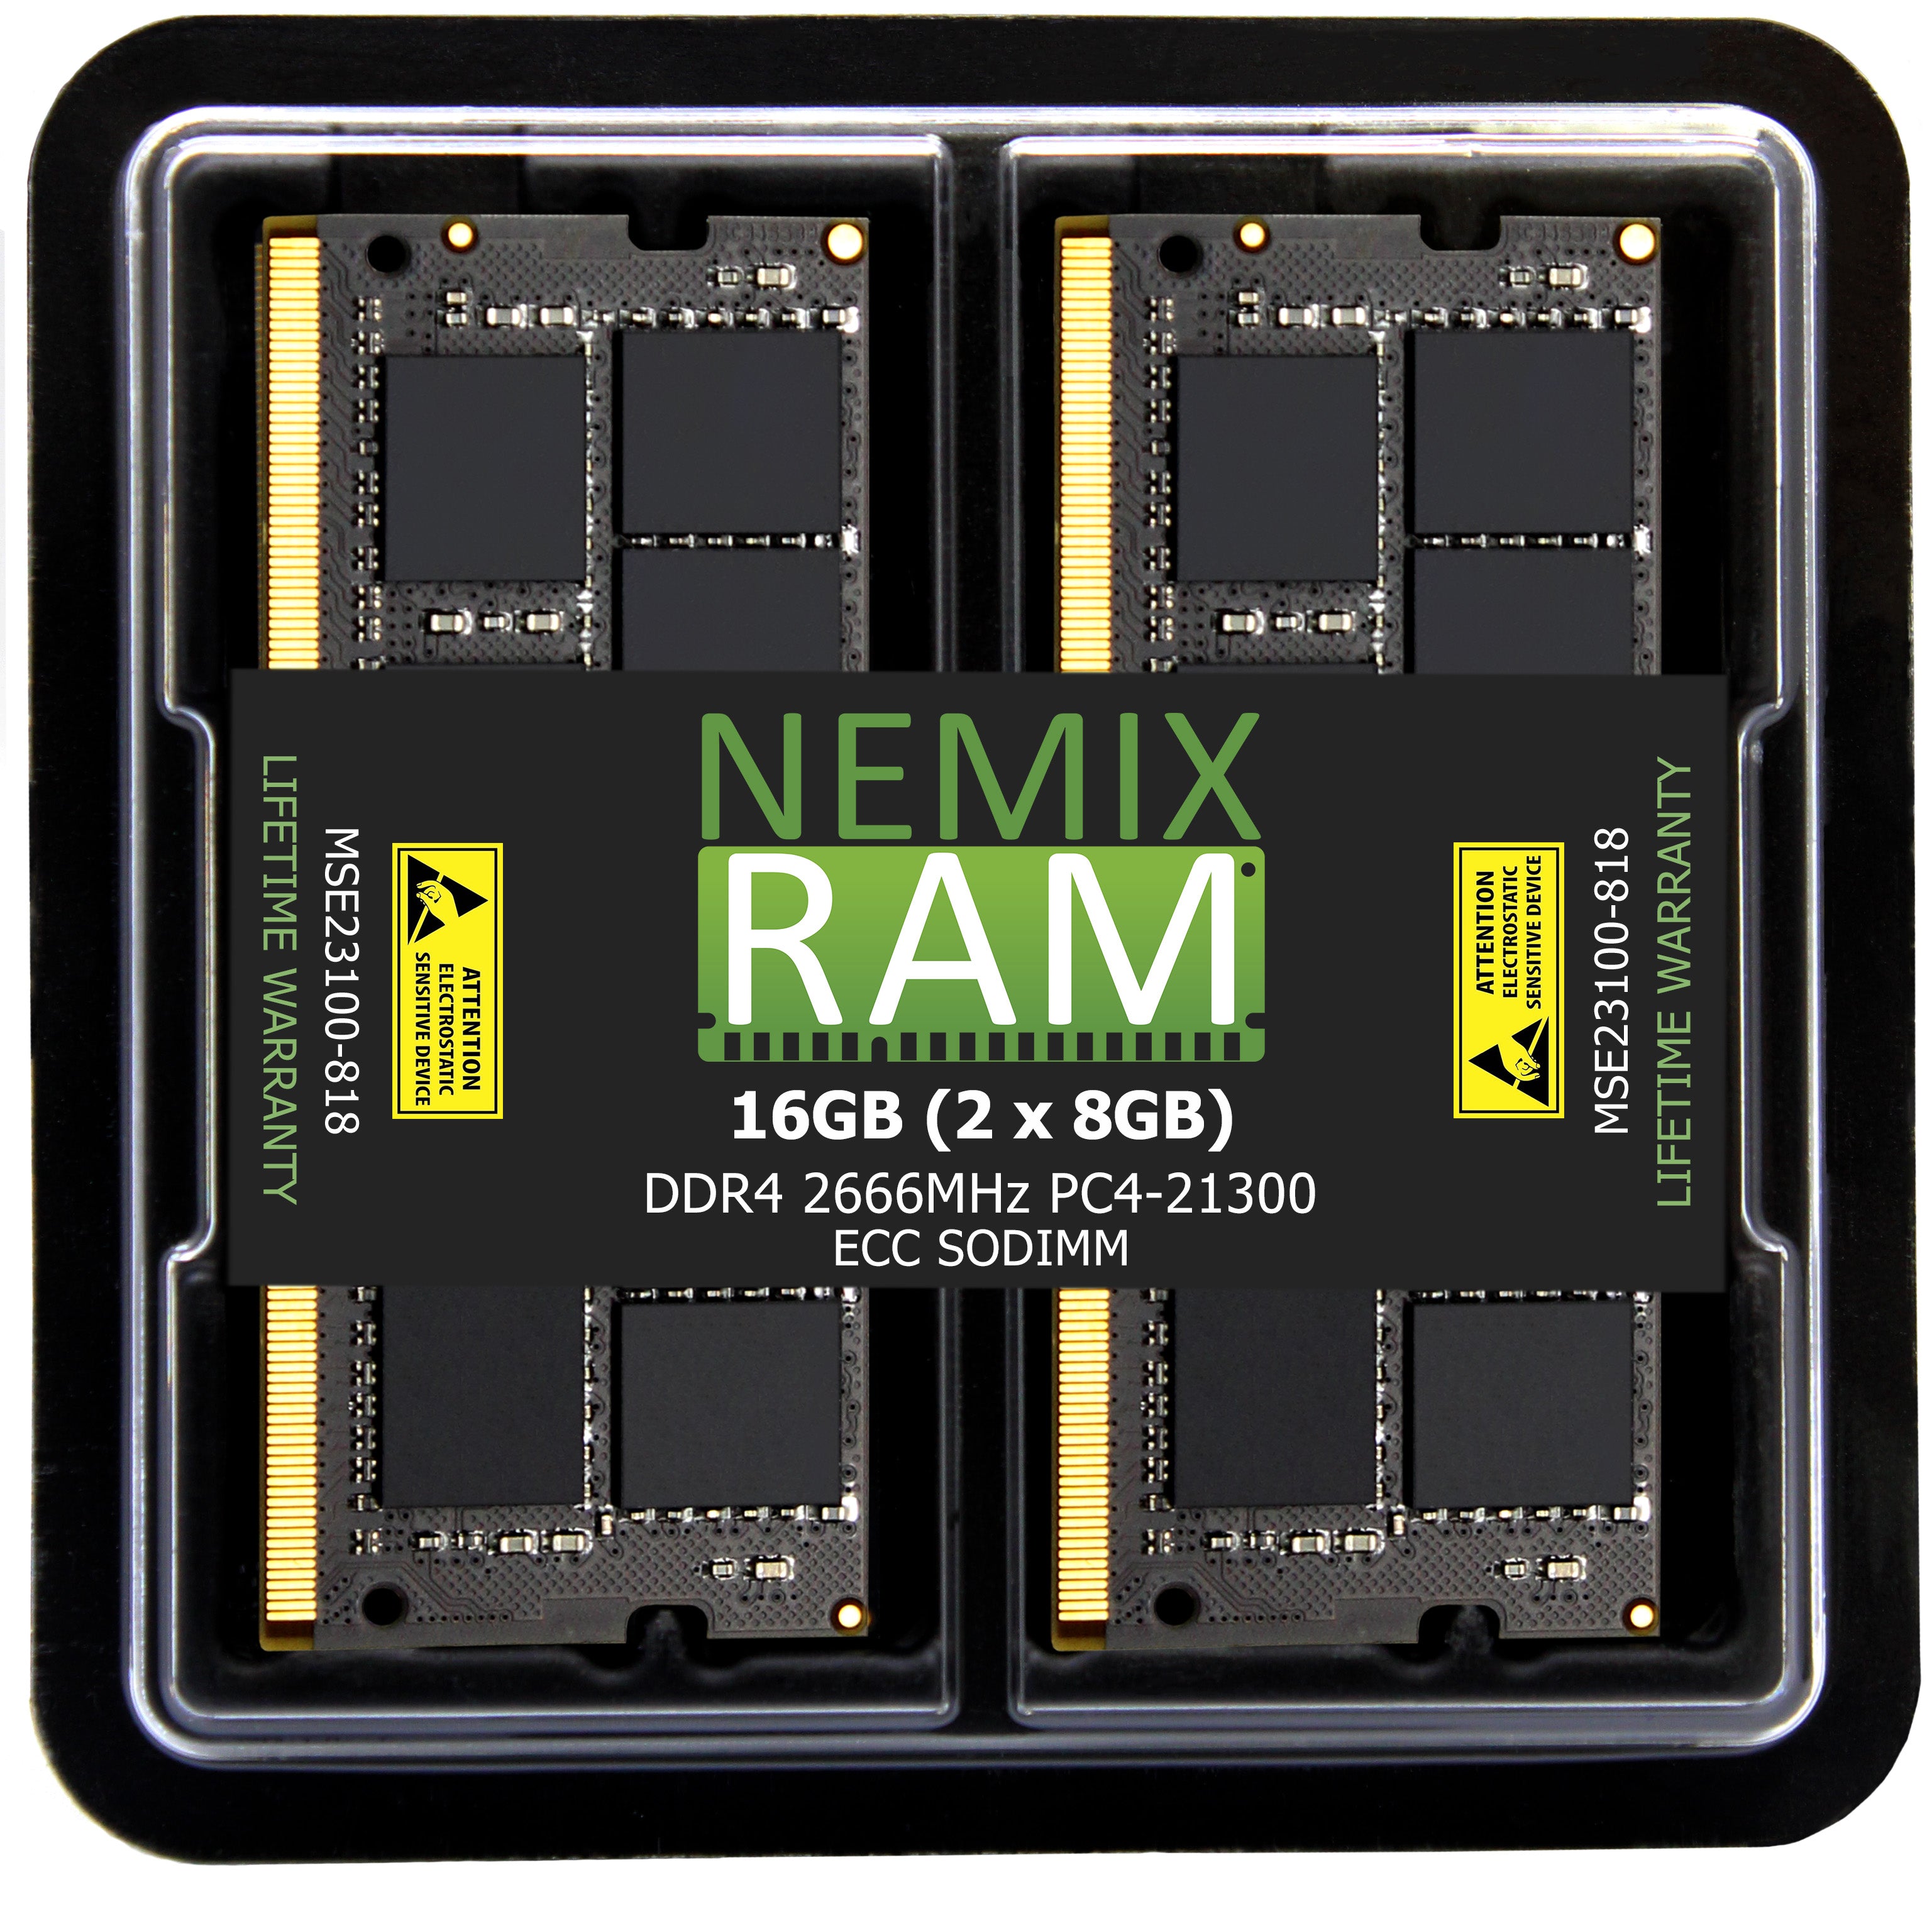 NEMIX RAM Memory Upgrade equivalent to ASUSTOR AS-8GECD4 92M11-S8ECD40 ECC SODIMM Memory Module